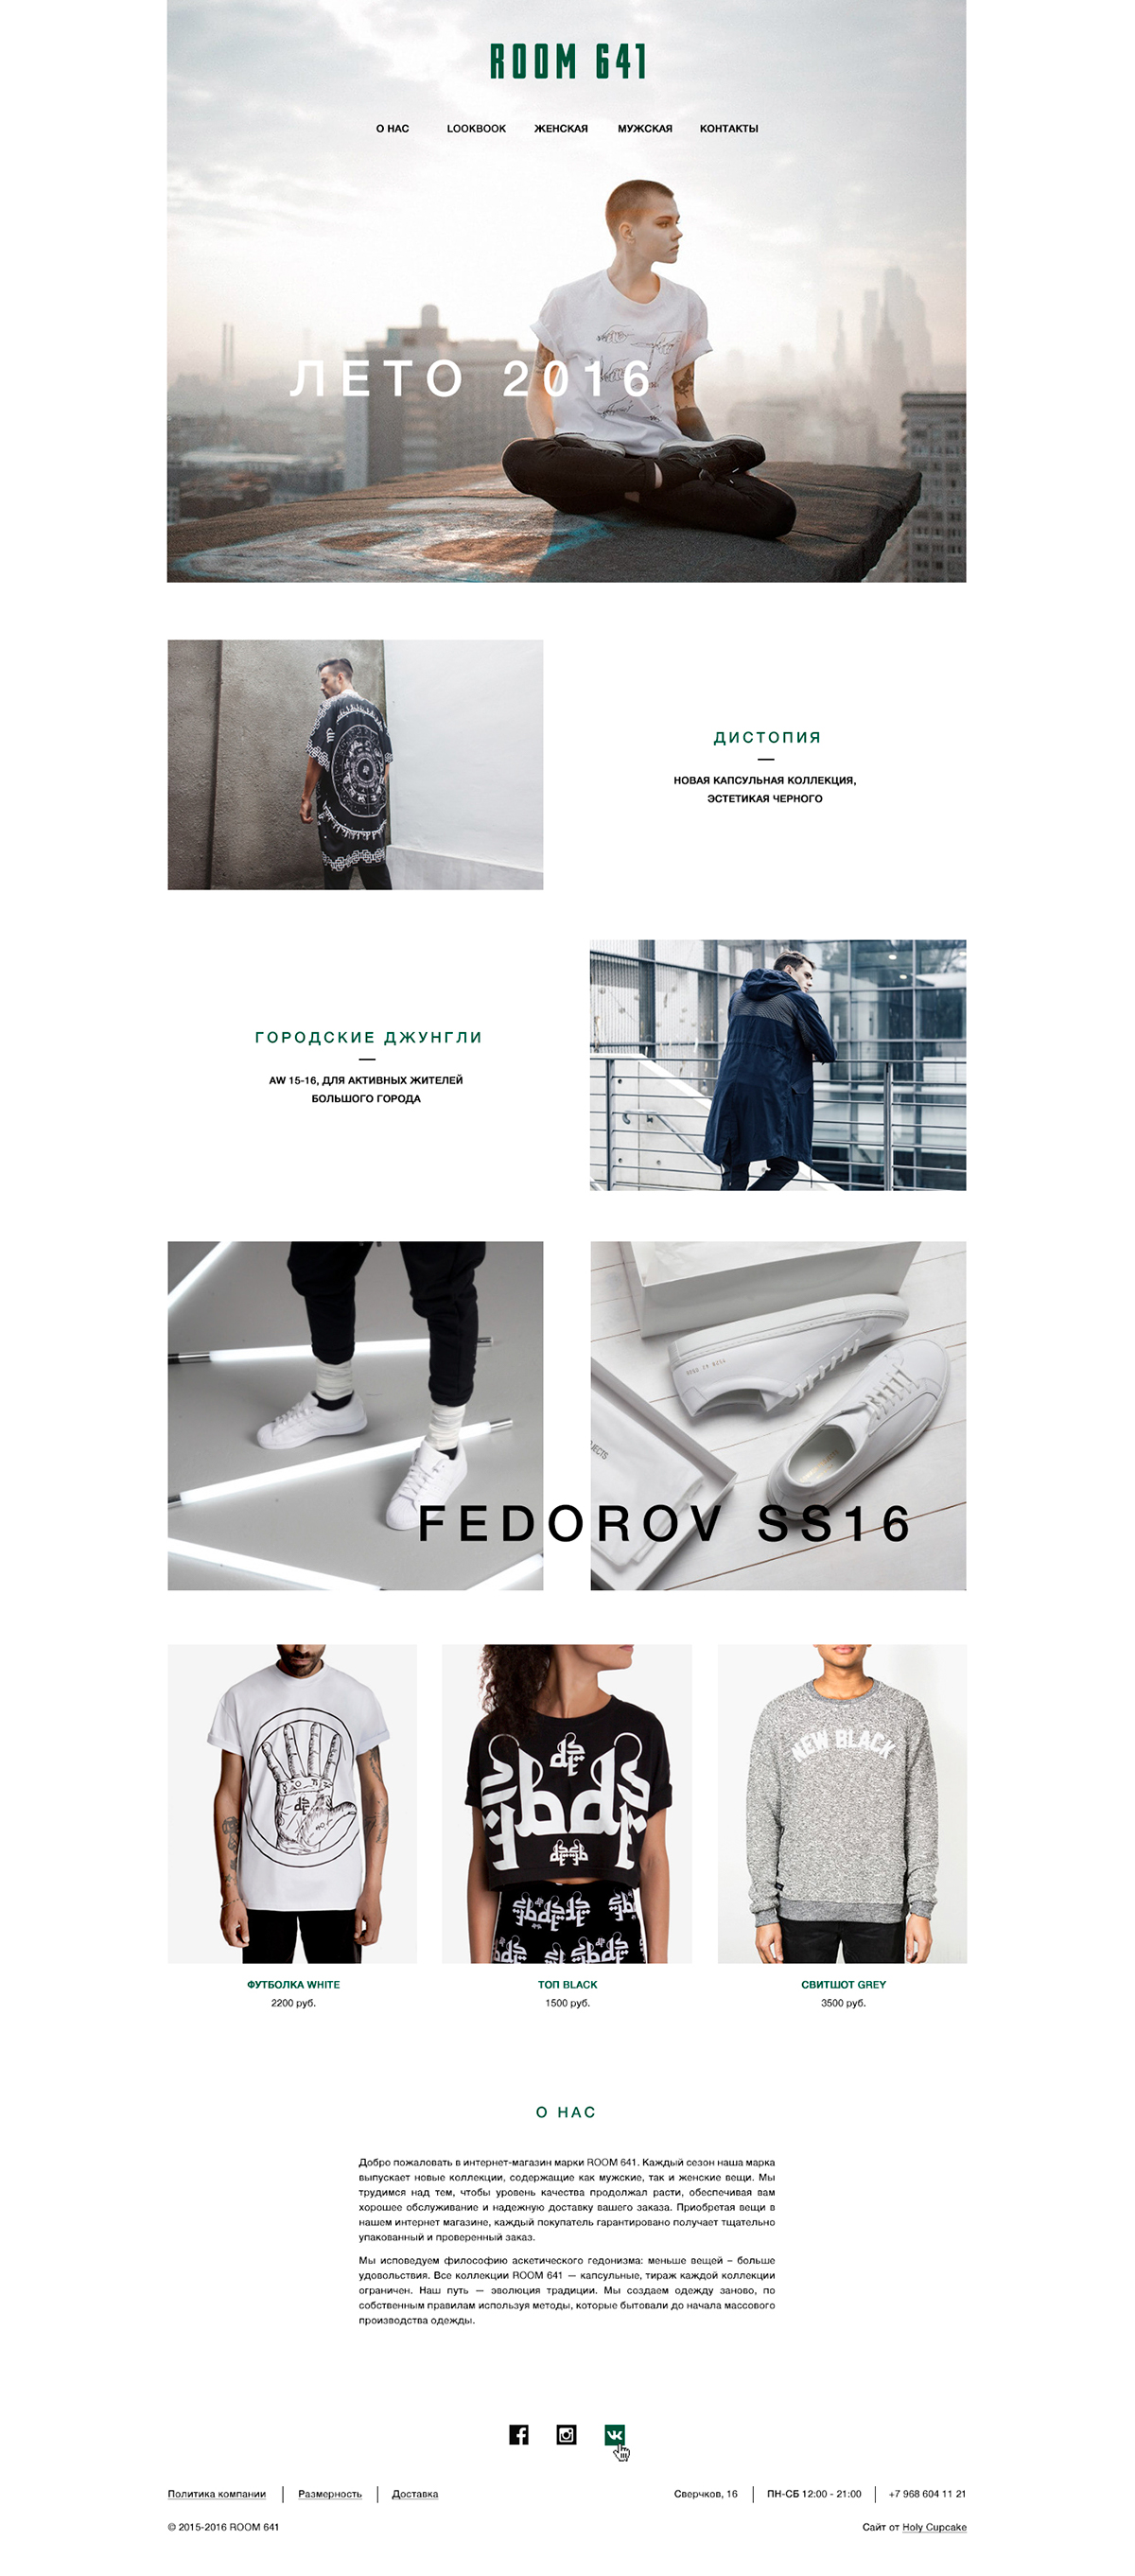 Web shop showroom streetwear concept design Clothing